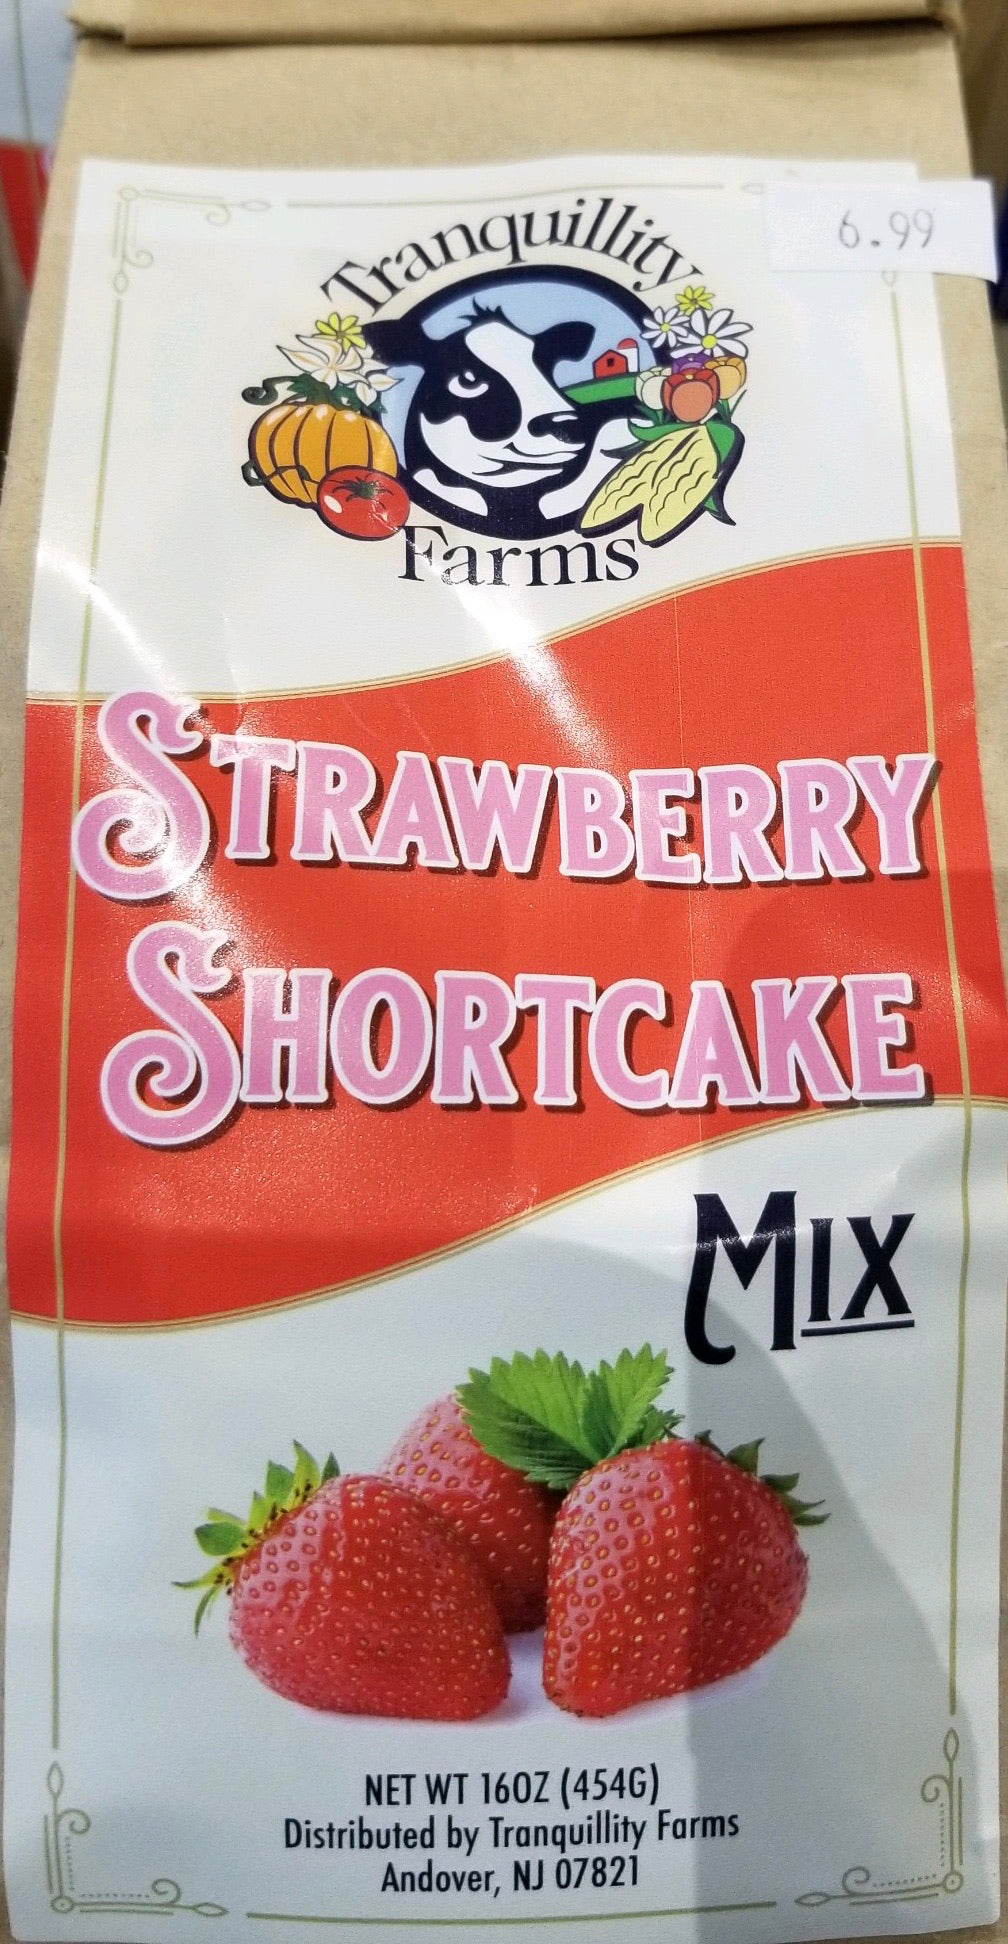 Strawberry shortcake mix